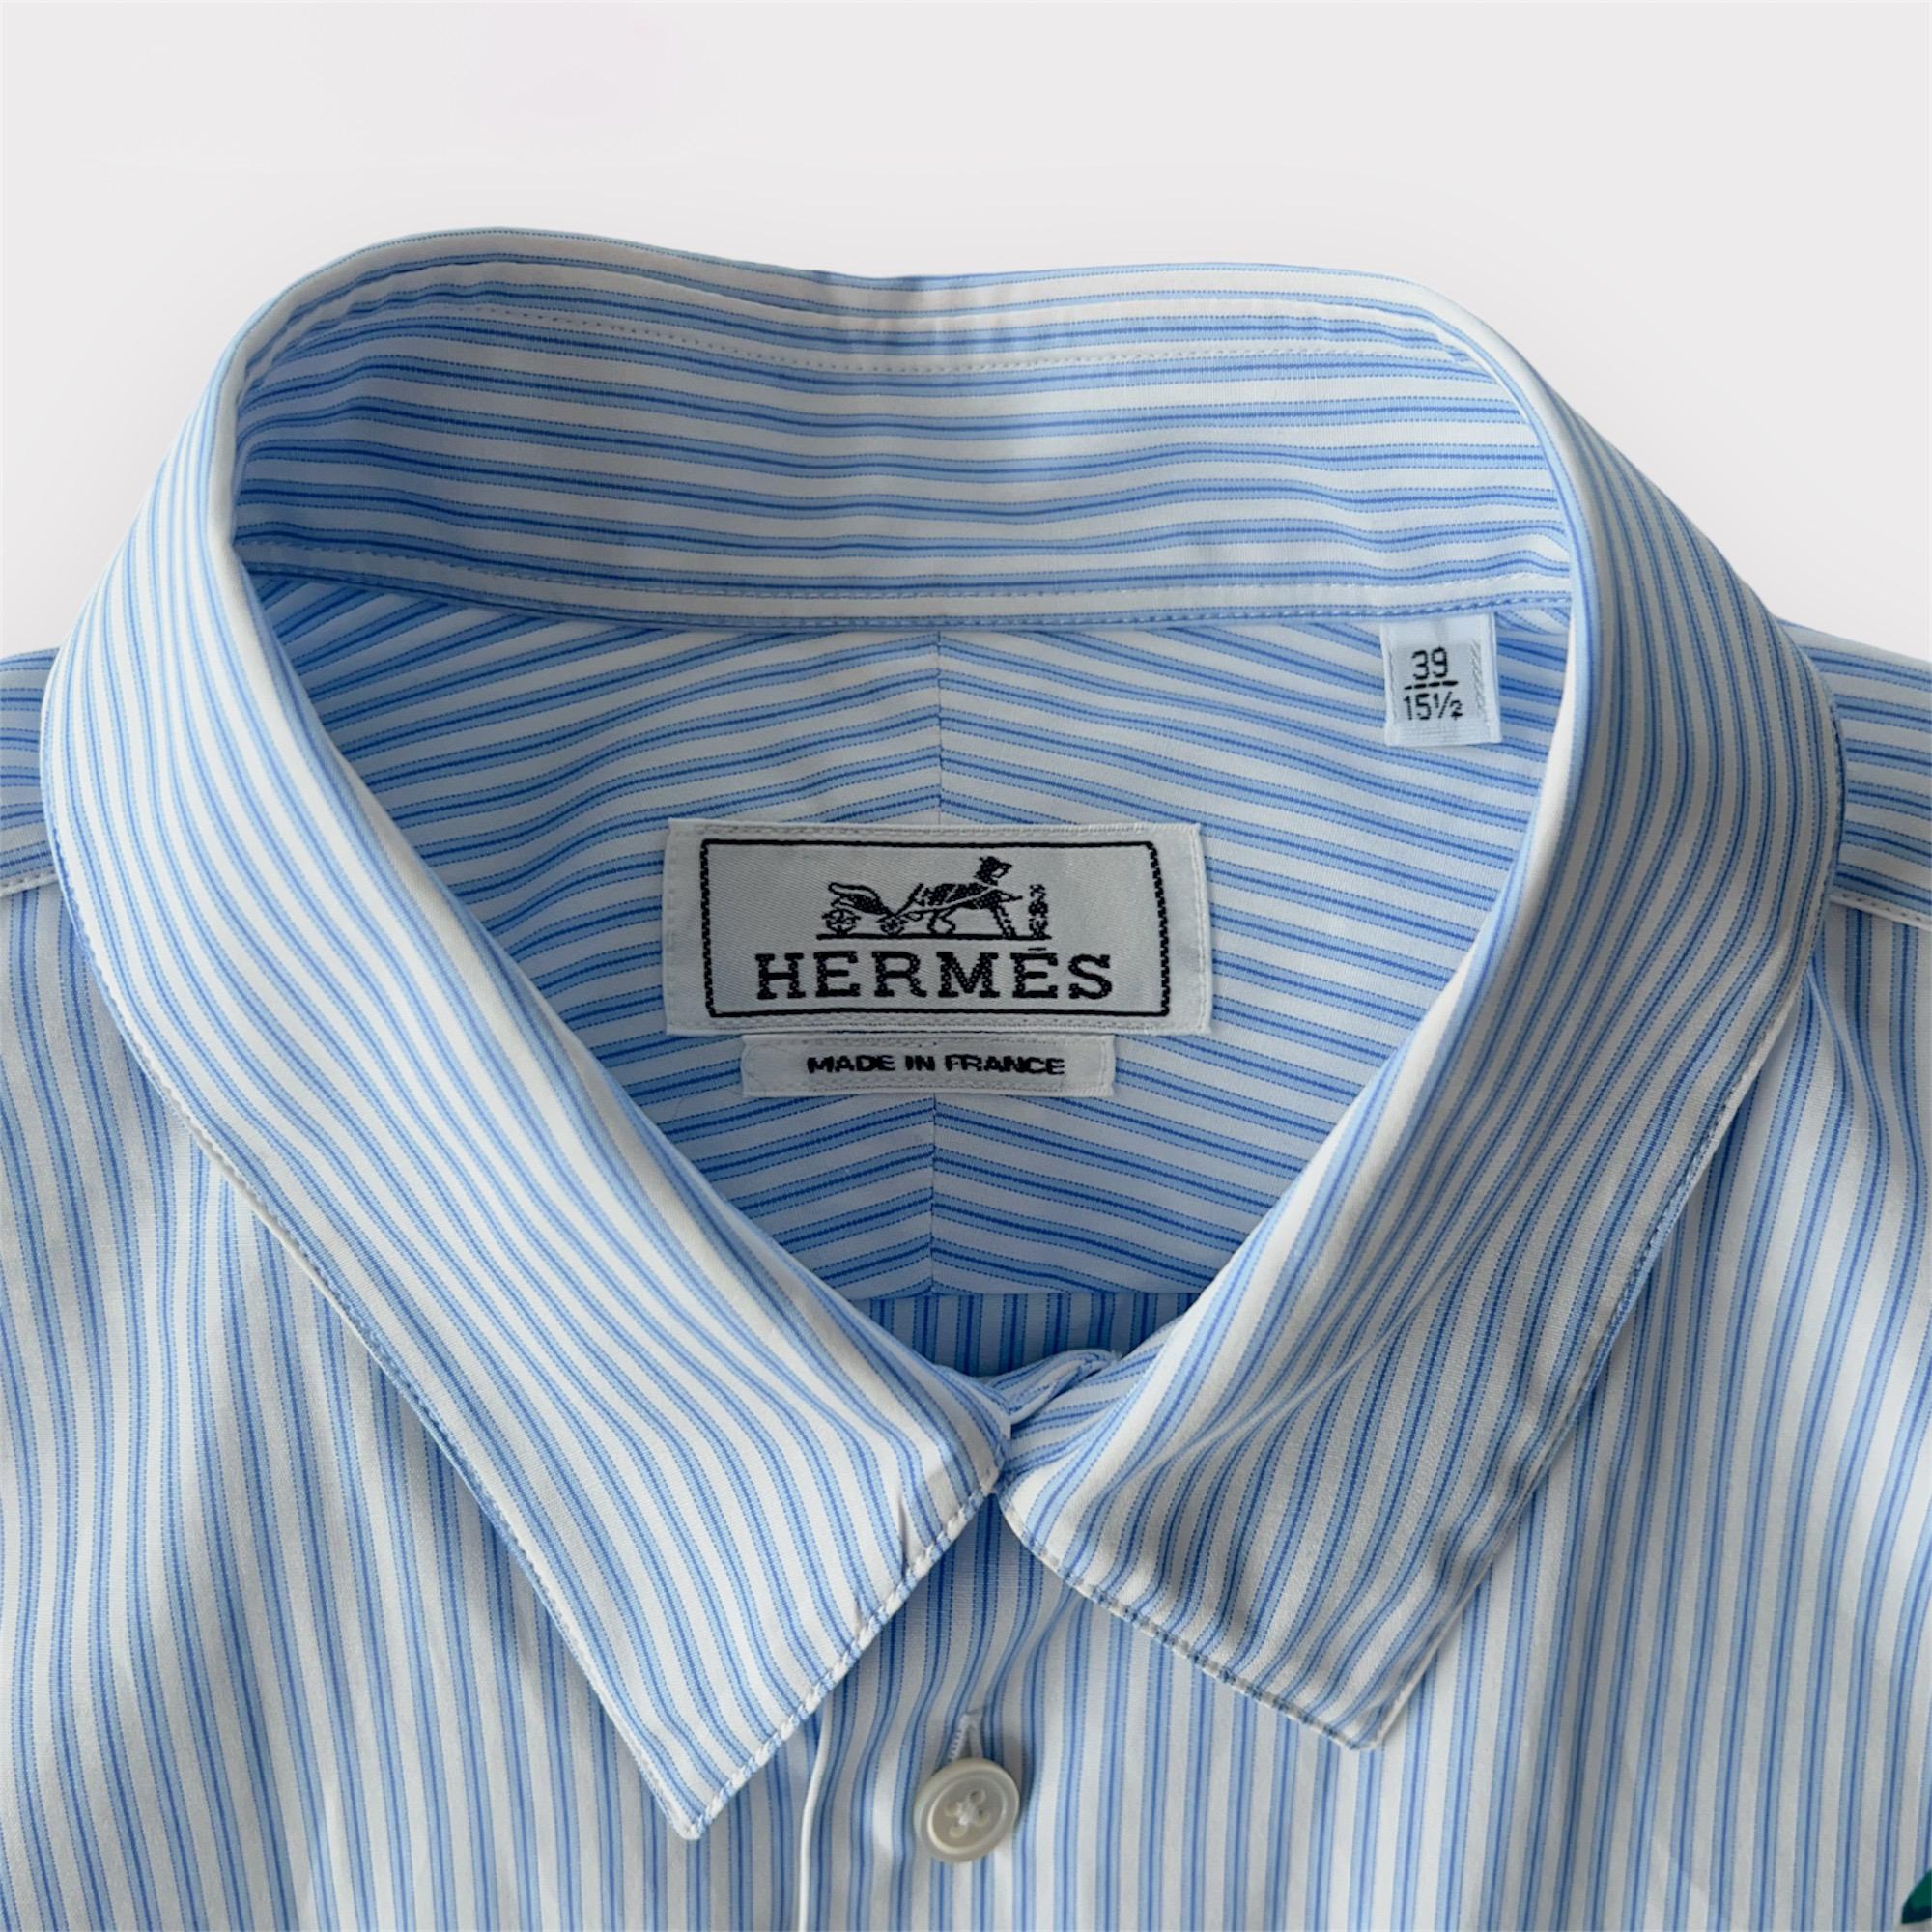 Hermès Men's 'Sportif Patch' Shirt, Spring / Summer 23, Size 39 EU For Sale 1